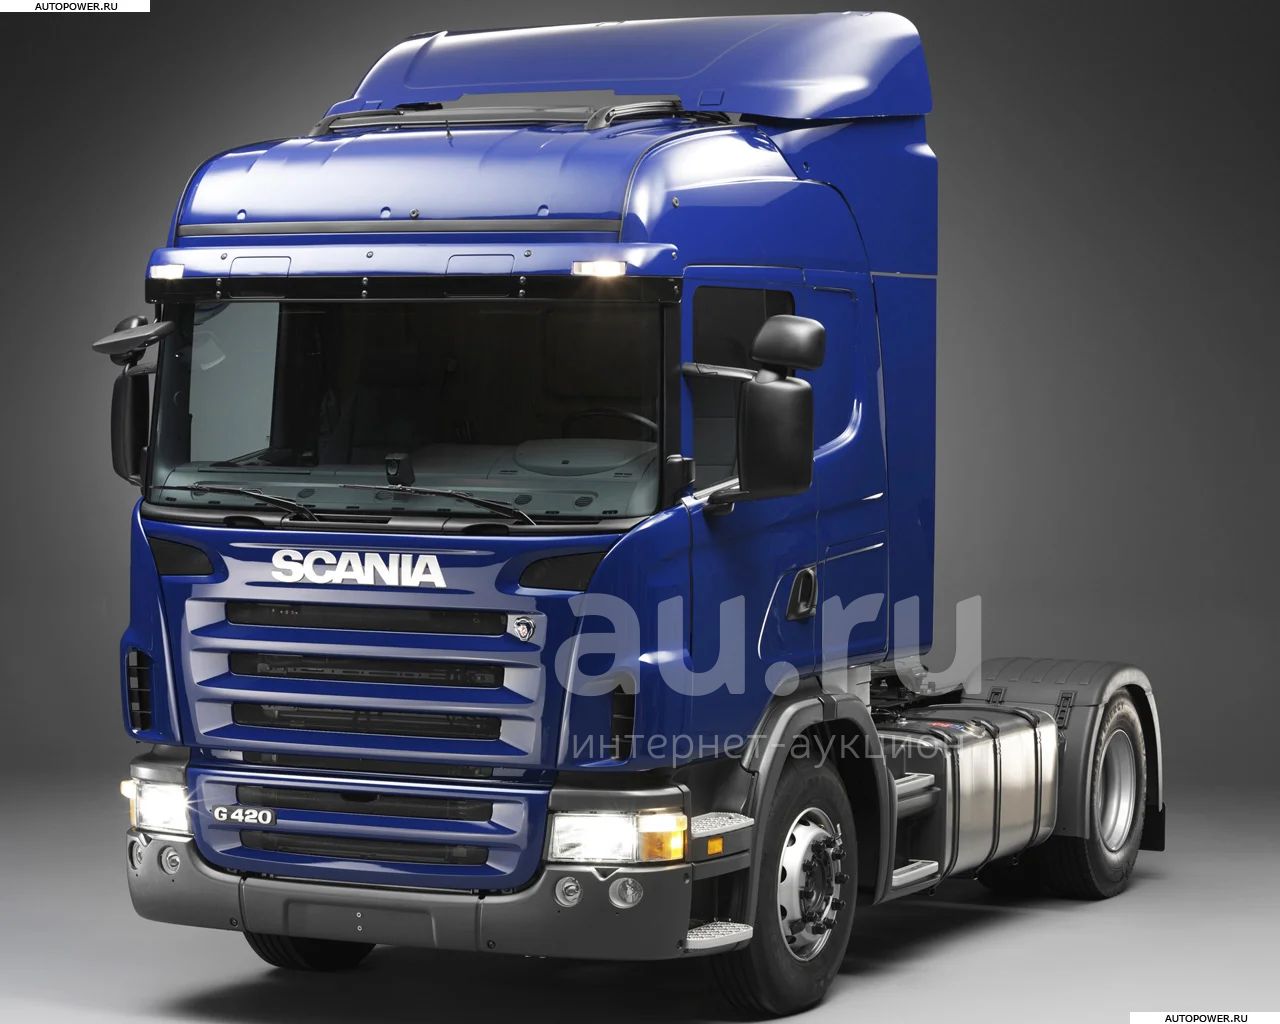 Scania g series. Скания тягач g420. Скания r340. Скания g 440 тягач. Скания 420 грузовик.